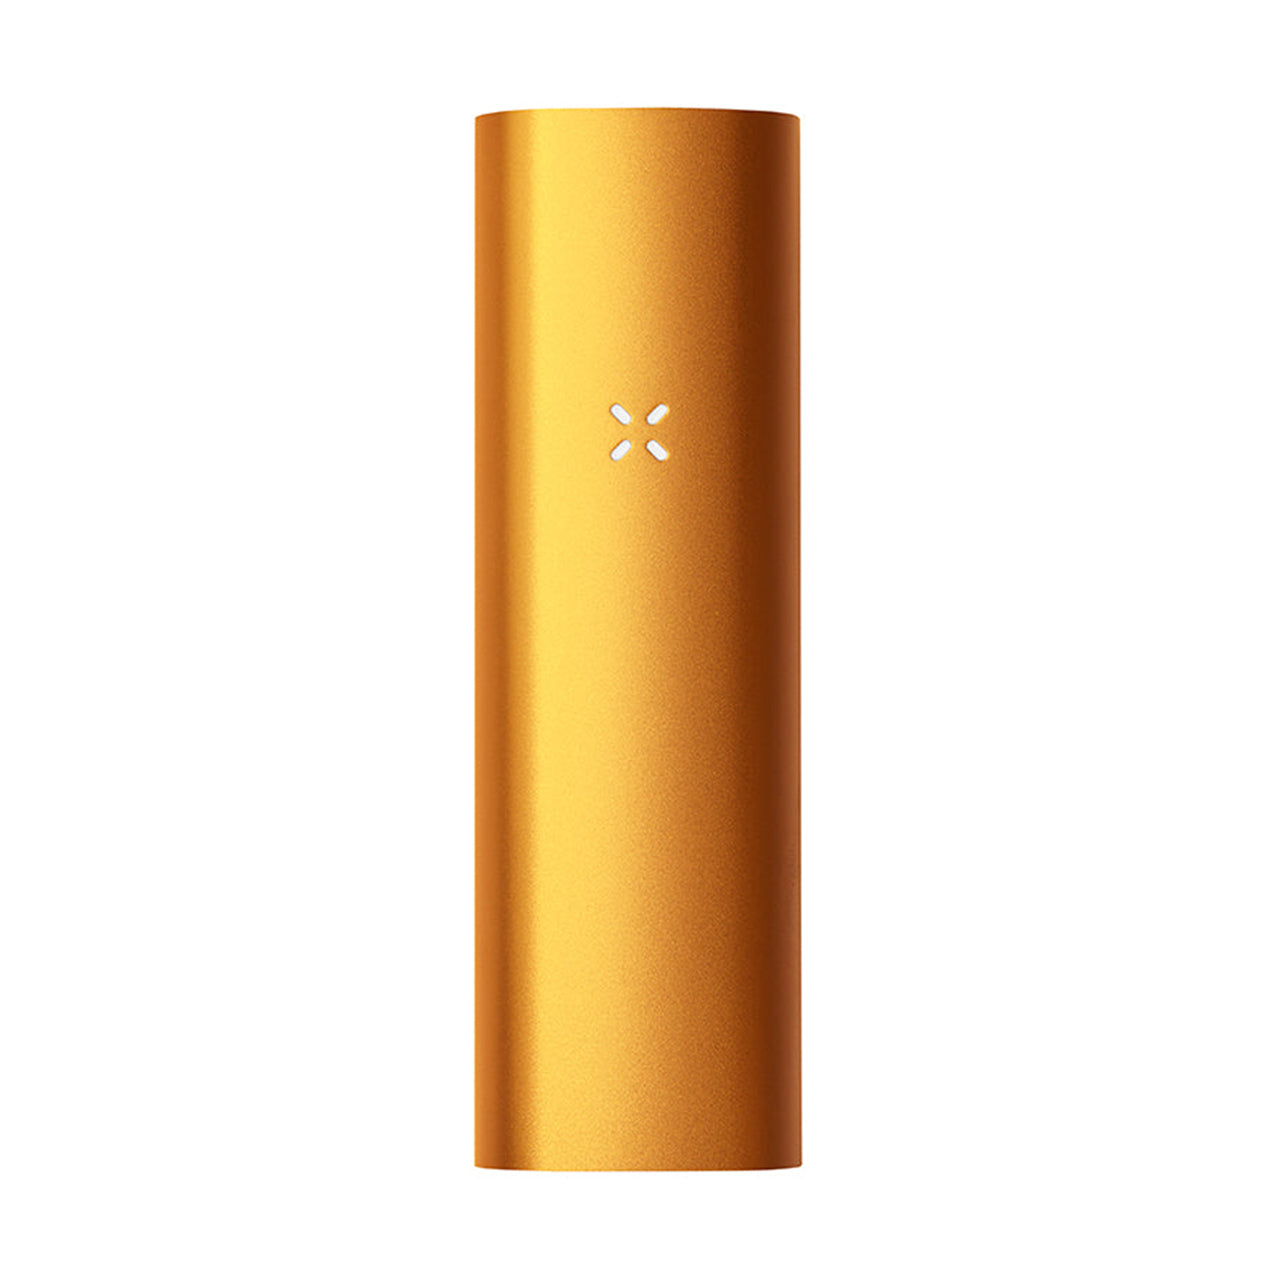 pax 3 portable herb vaporizer amber